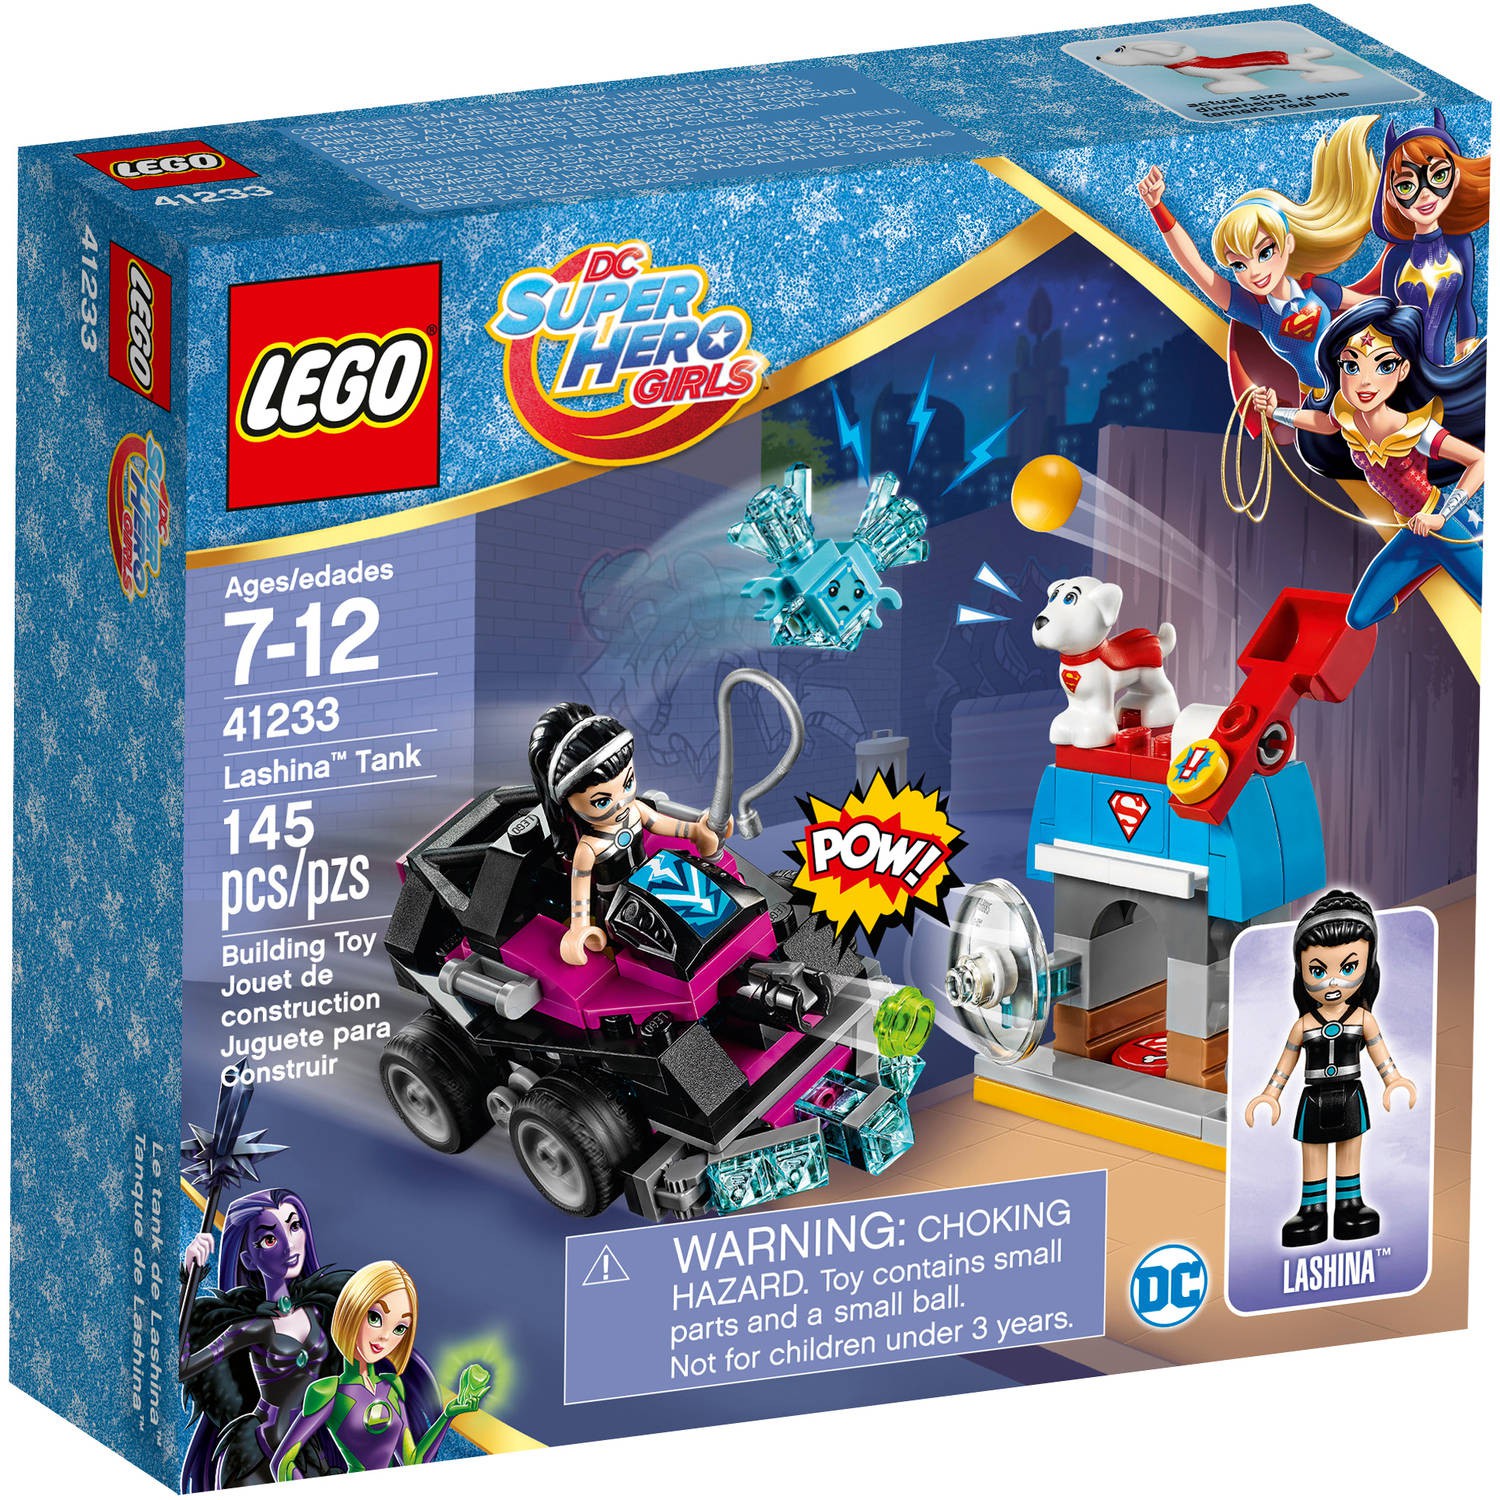 superhero girl lego sets